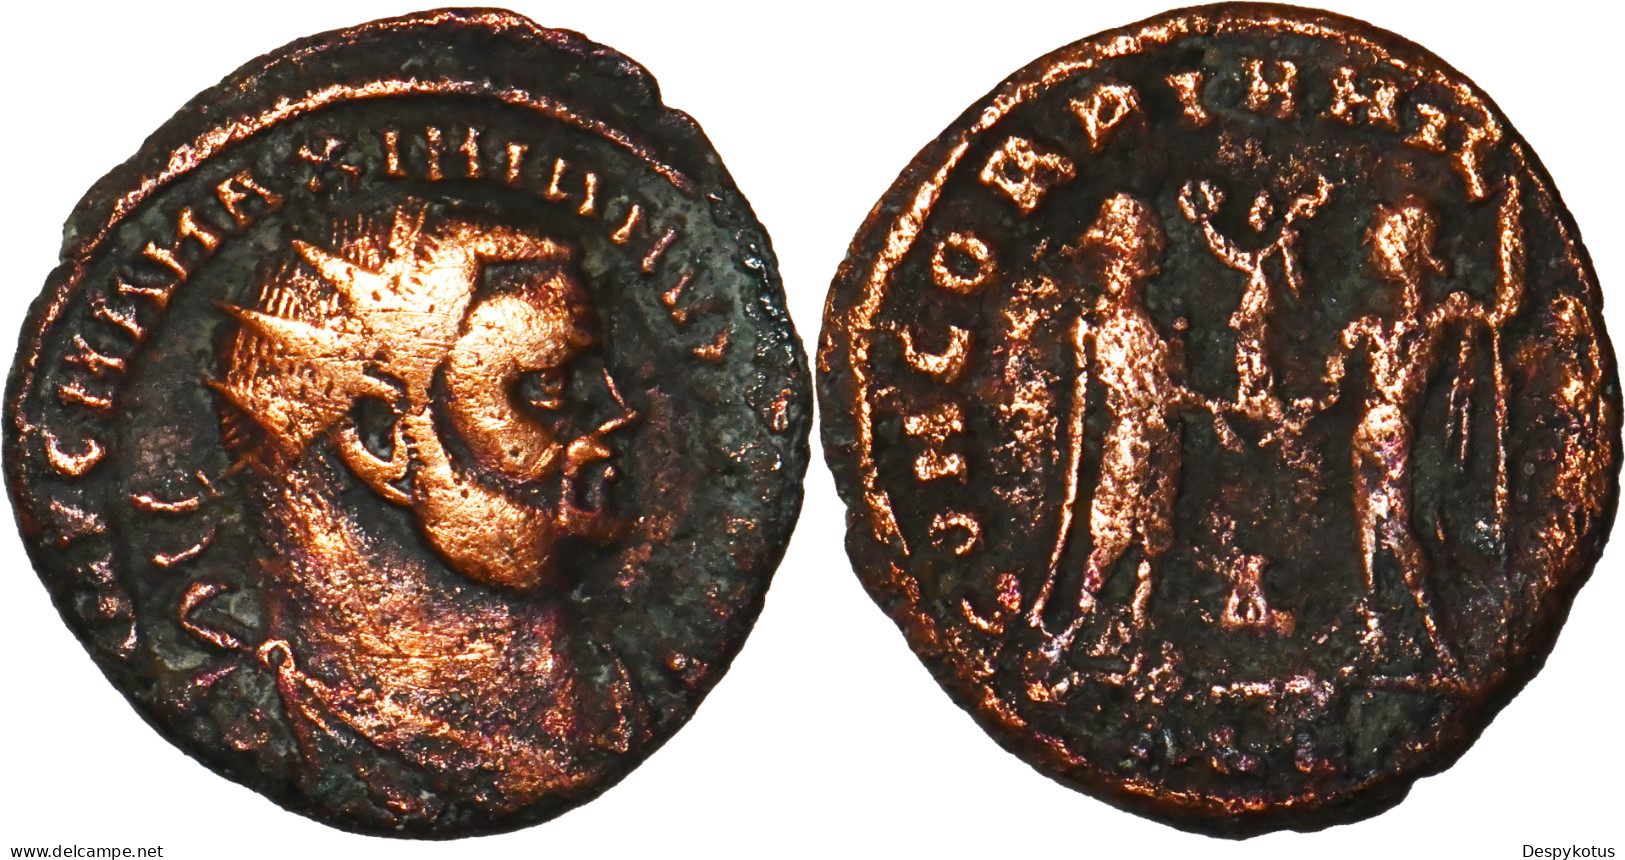 ROME - Aurelianus - MAXIMIEN HERCULE - CONCORDIA MILITVM - ALE - RIC.46b - 19-171 - Die Tetrarchie Und Konstantin Der Große (284 / 307)